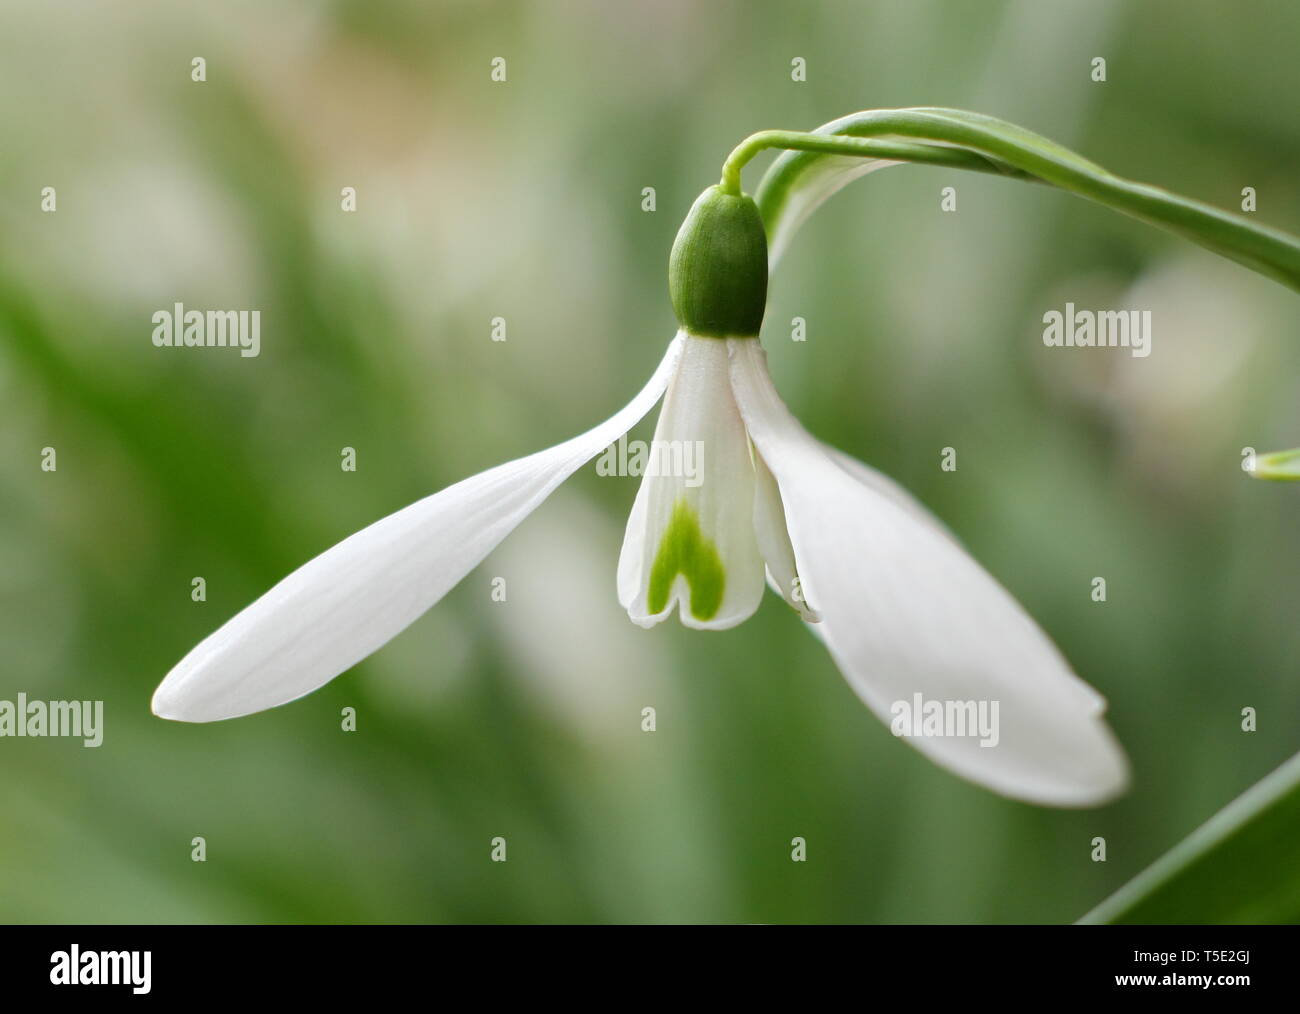 Galanthus atkinsii 'Lyn'. Large, elegant bloom of early flowering hybrid snowdrop atkinsii 'Lyn' - February, UK Stock Photo